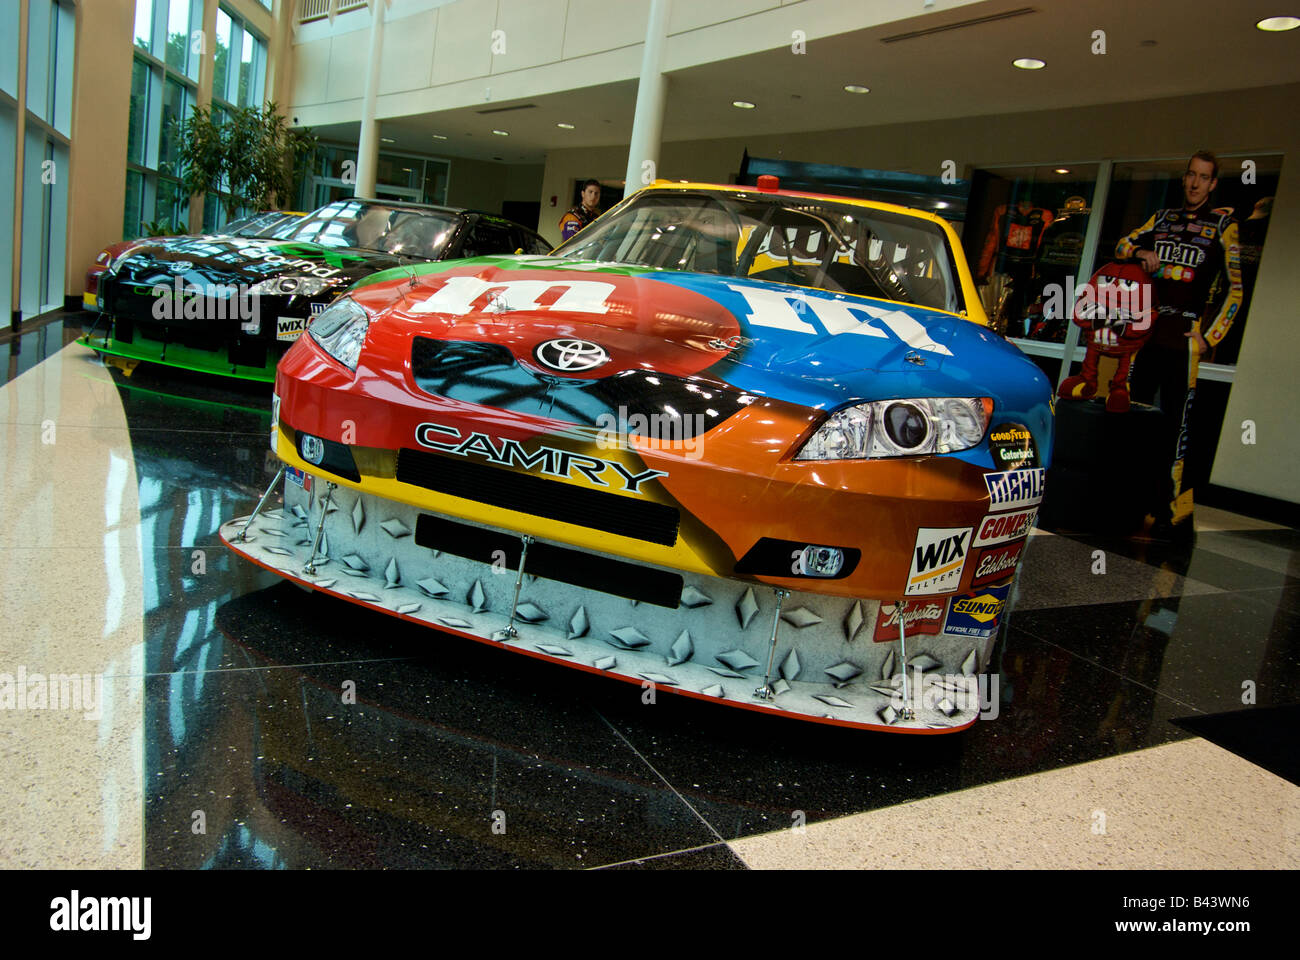 Kyle Busch m&m Toyota Camry NASCAR Race Cars con sponsor le decalcomanie su display a Joe Gibbs Racing showroom Foto Stock